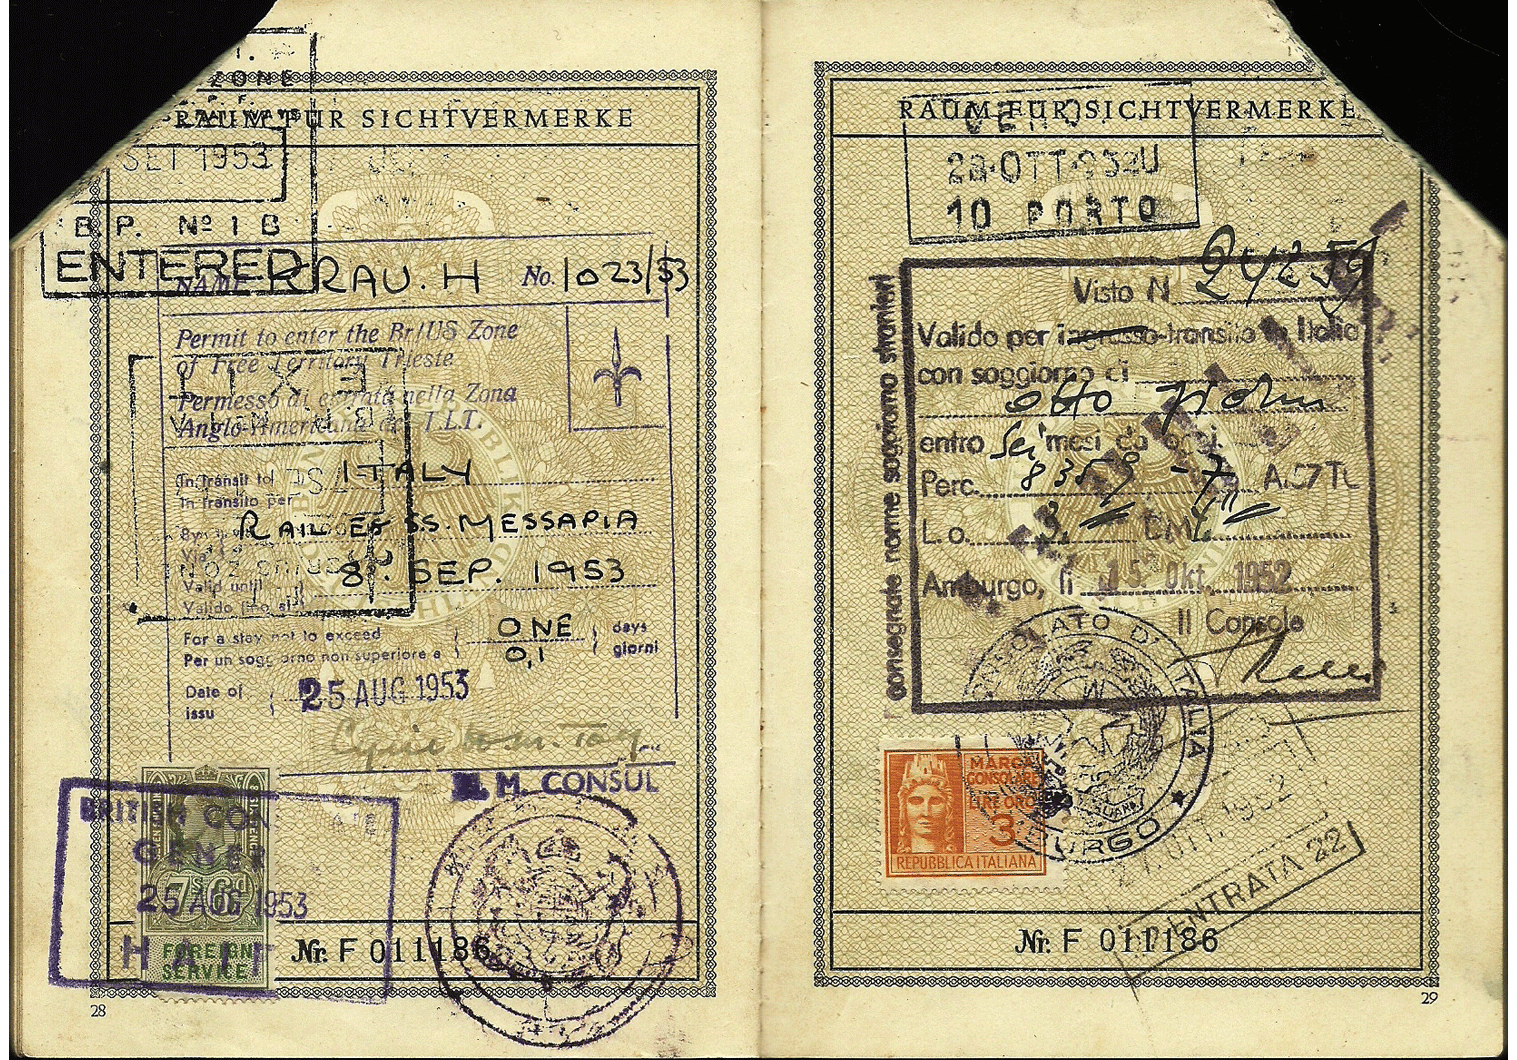 TRIESTE - Allied Identity card in post-war occupational zone in Europe.